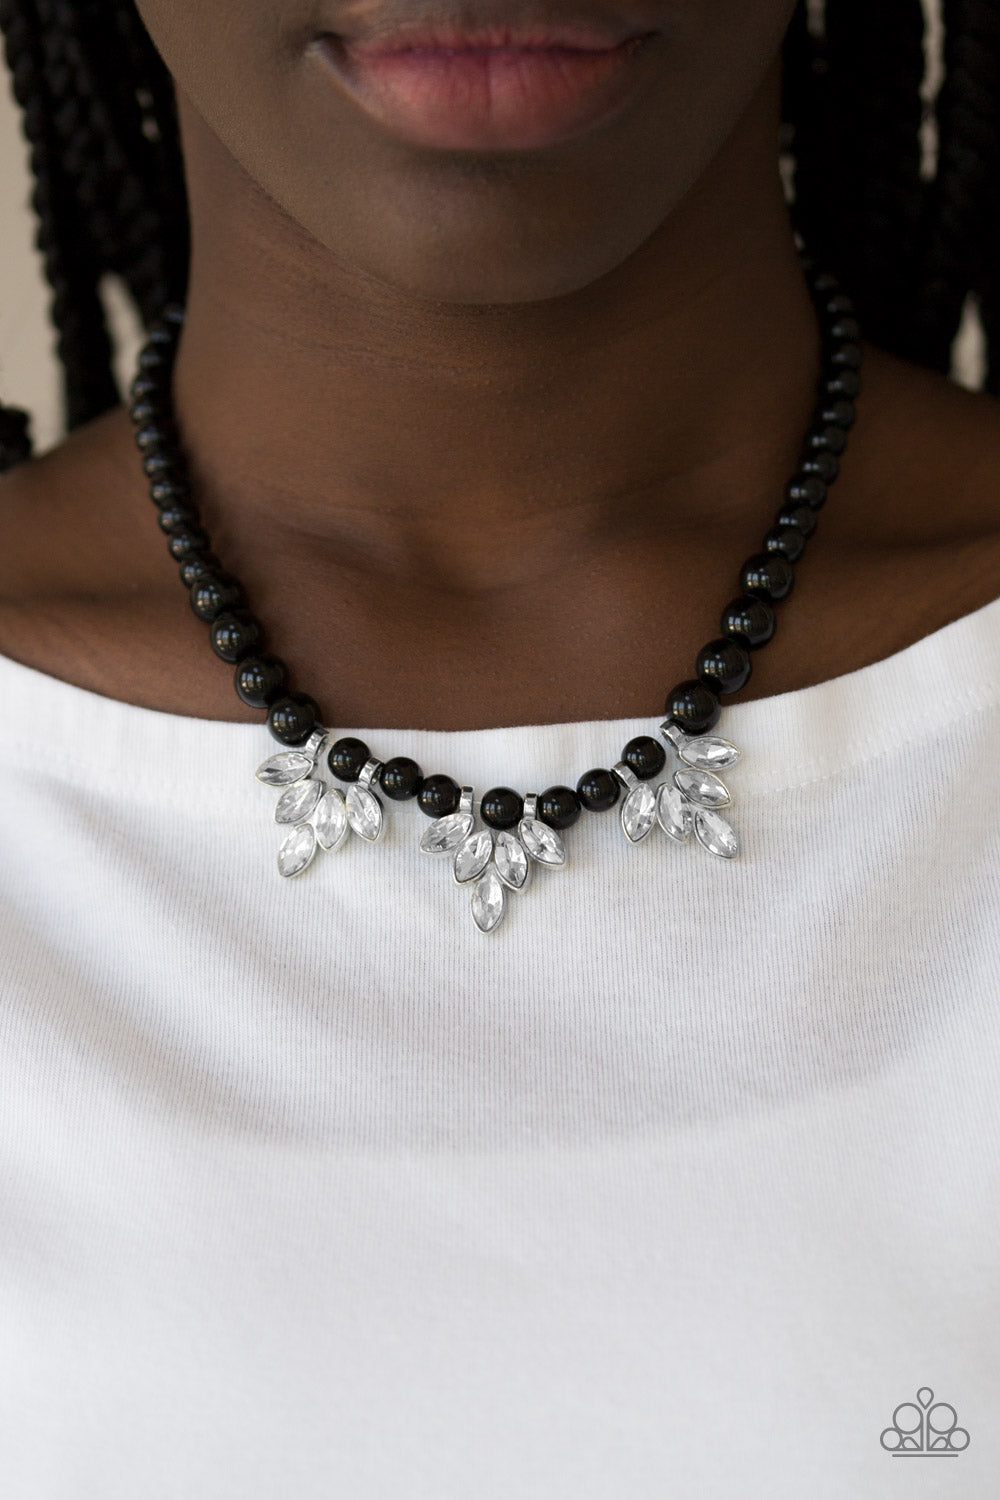 Society Socialite - Black necklace